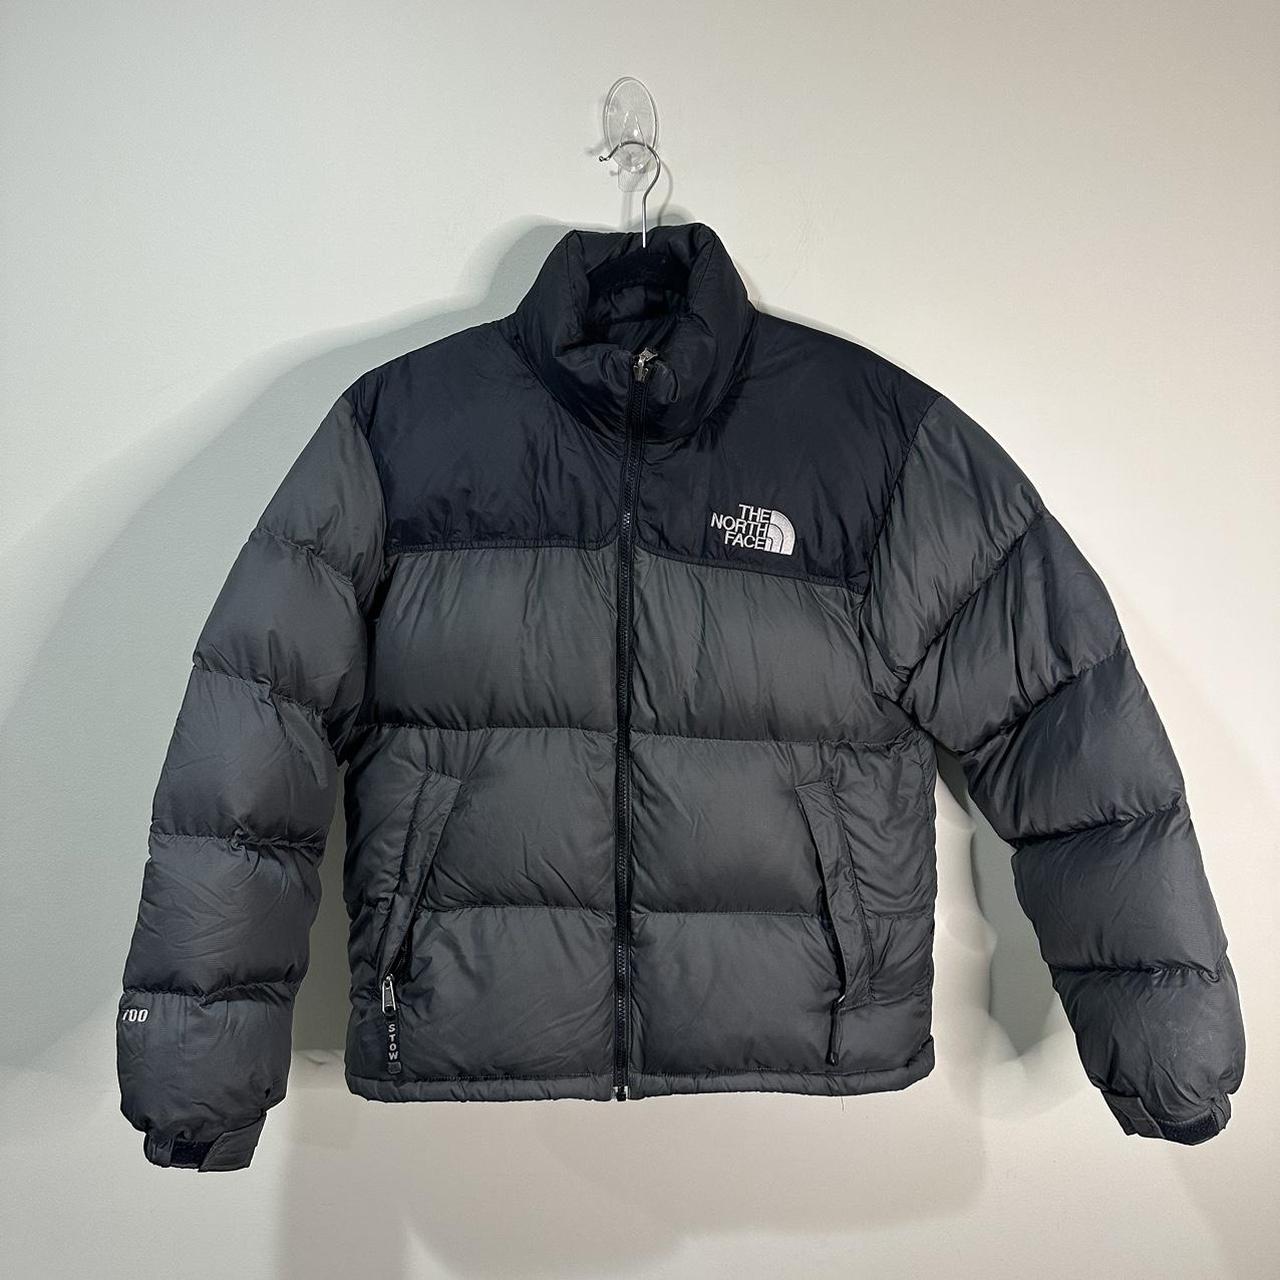 Men's North Face Puffer Jacket Size M 700 Black and... - Depop